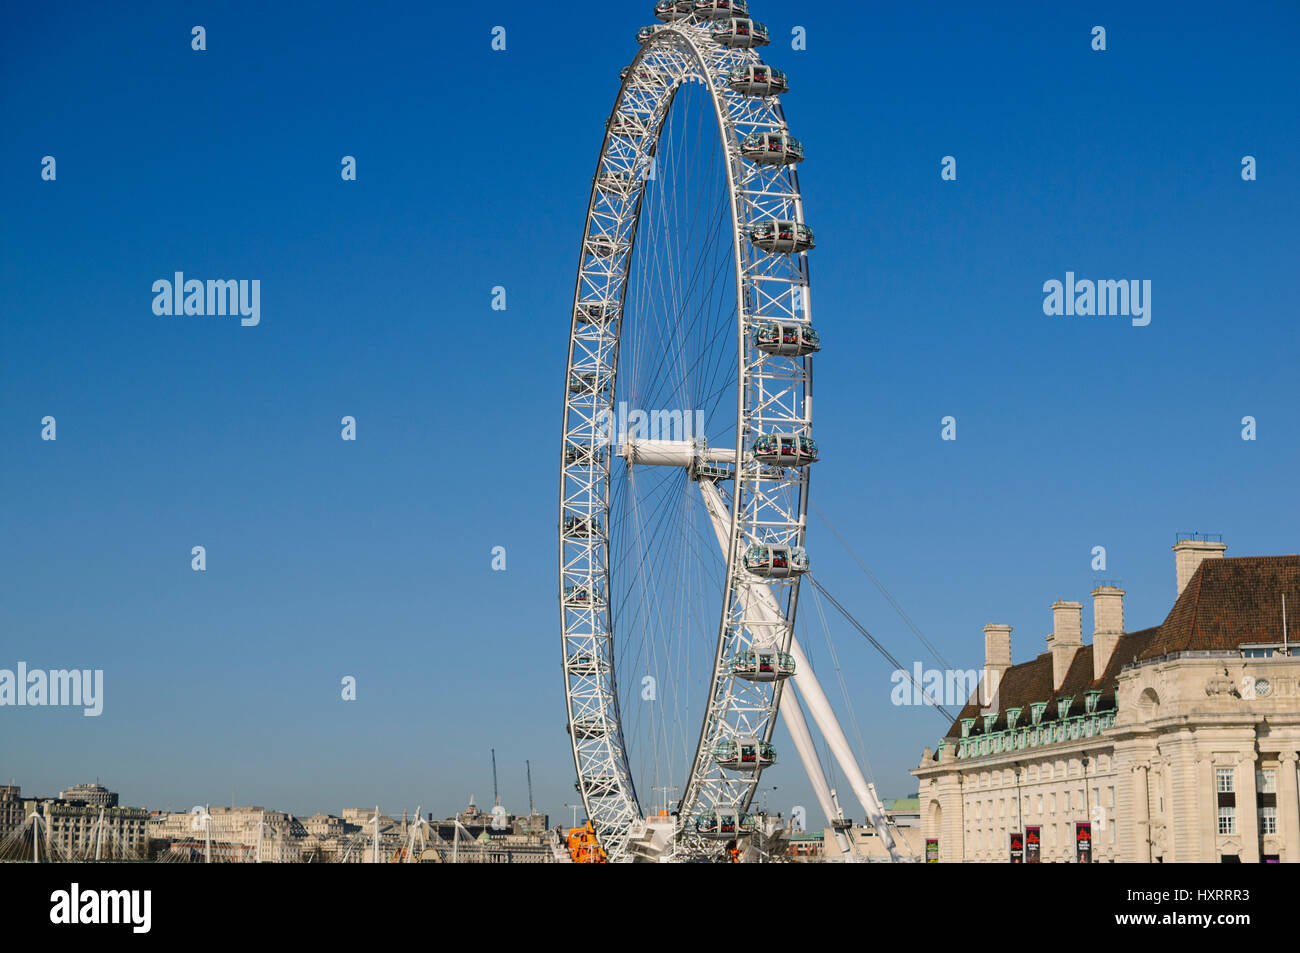 The London Eye street view - London, England 2017. Stock Photo